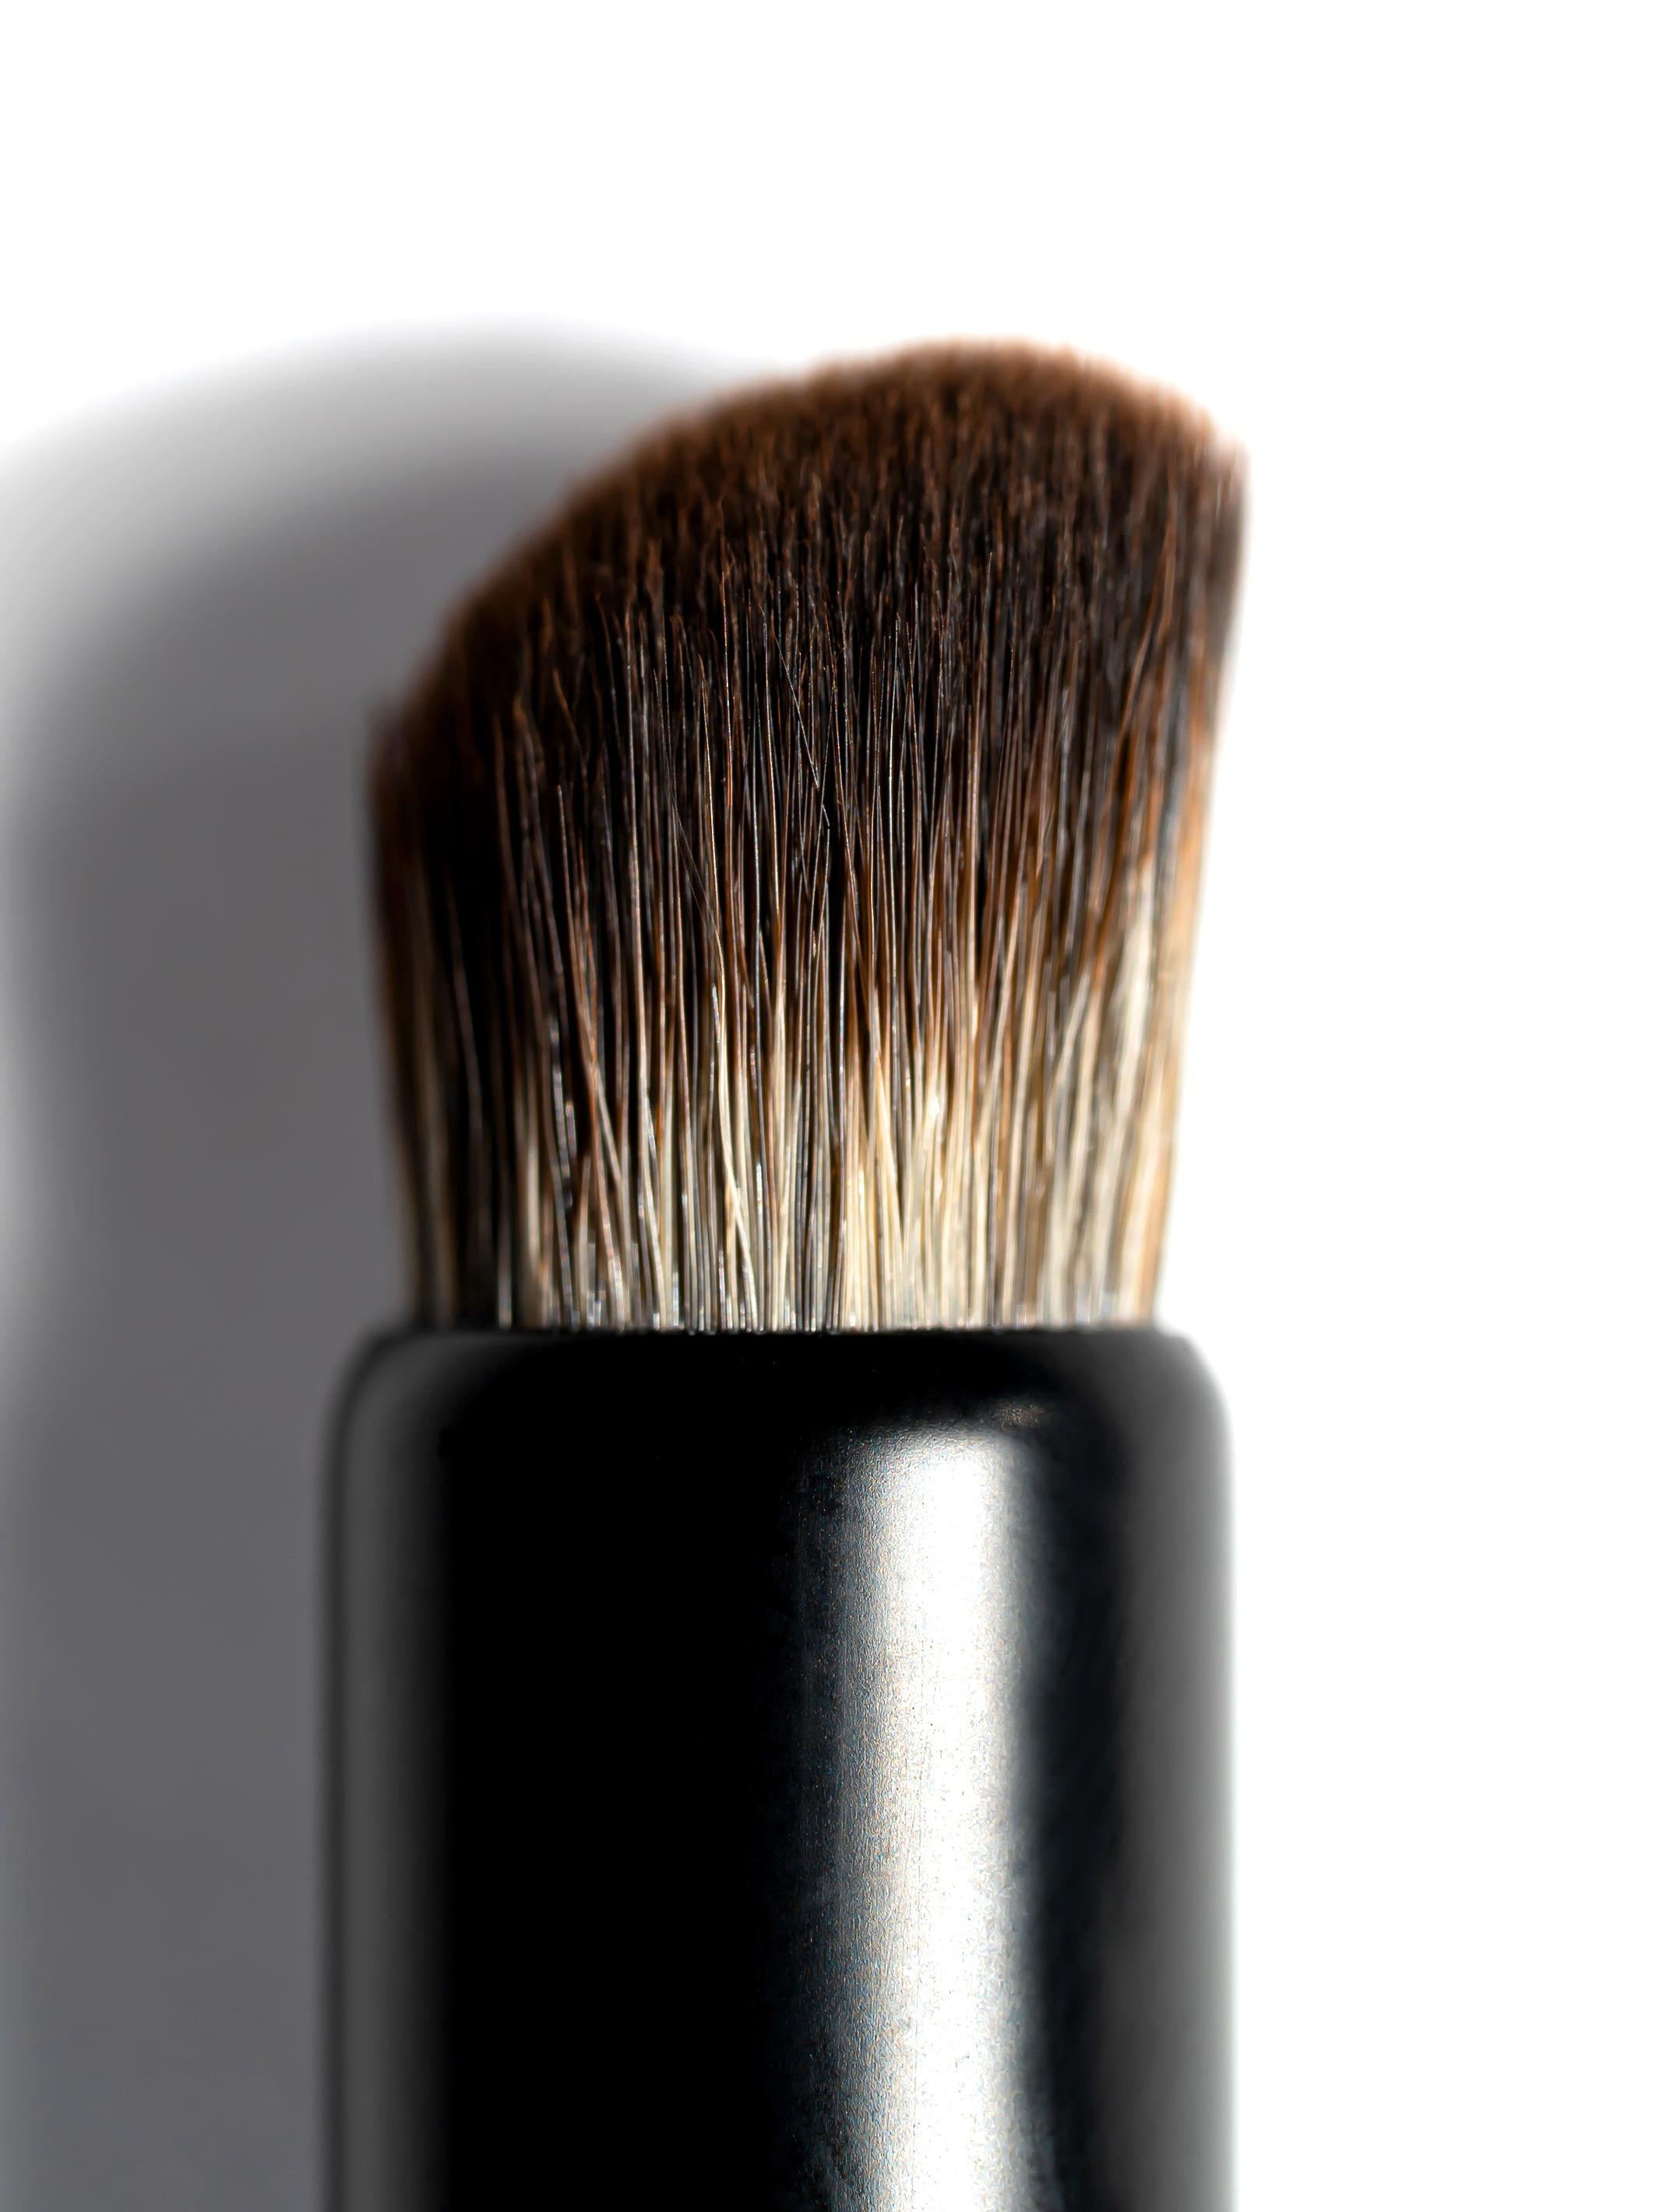 Flawless Beauty for Rose Ben and Foundation – Blending Concealer Brush